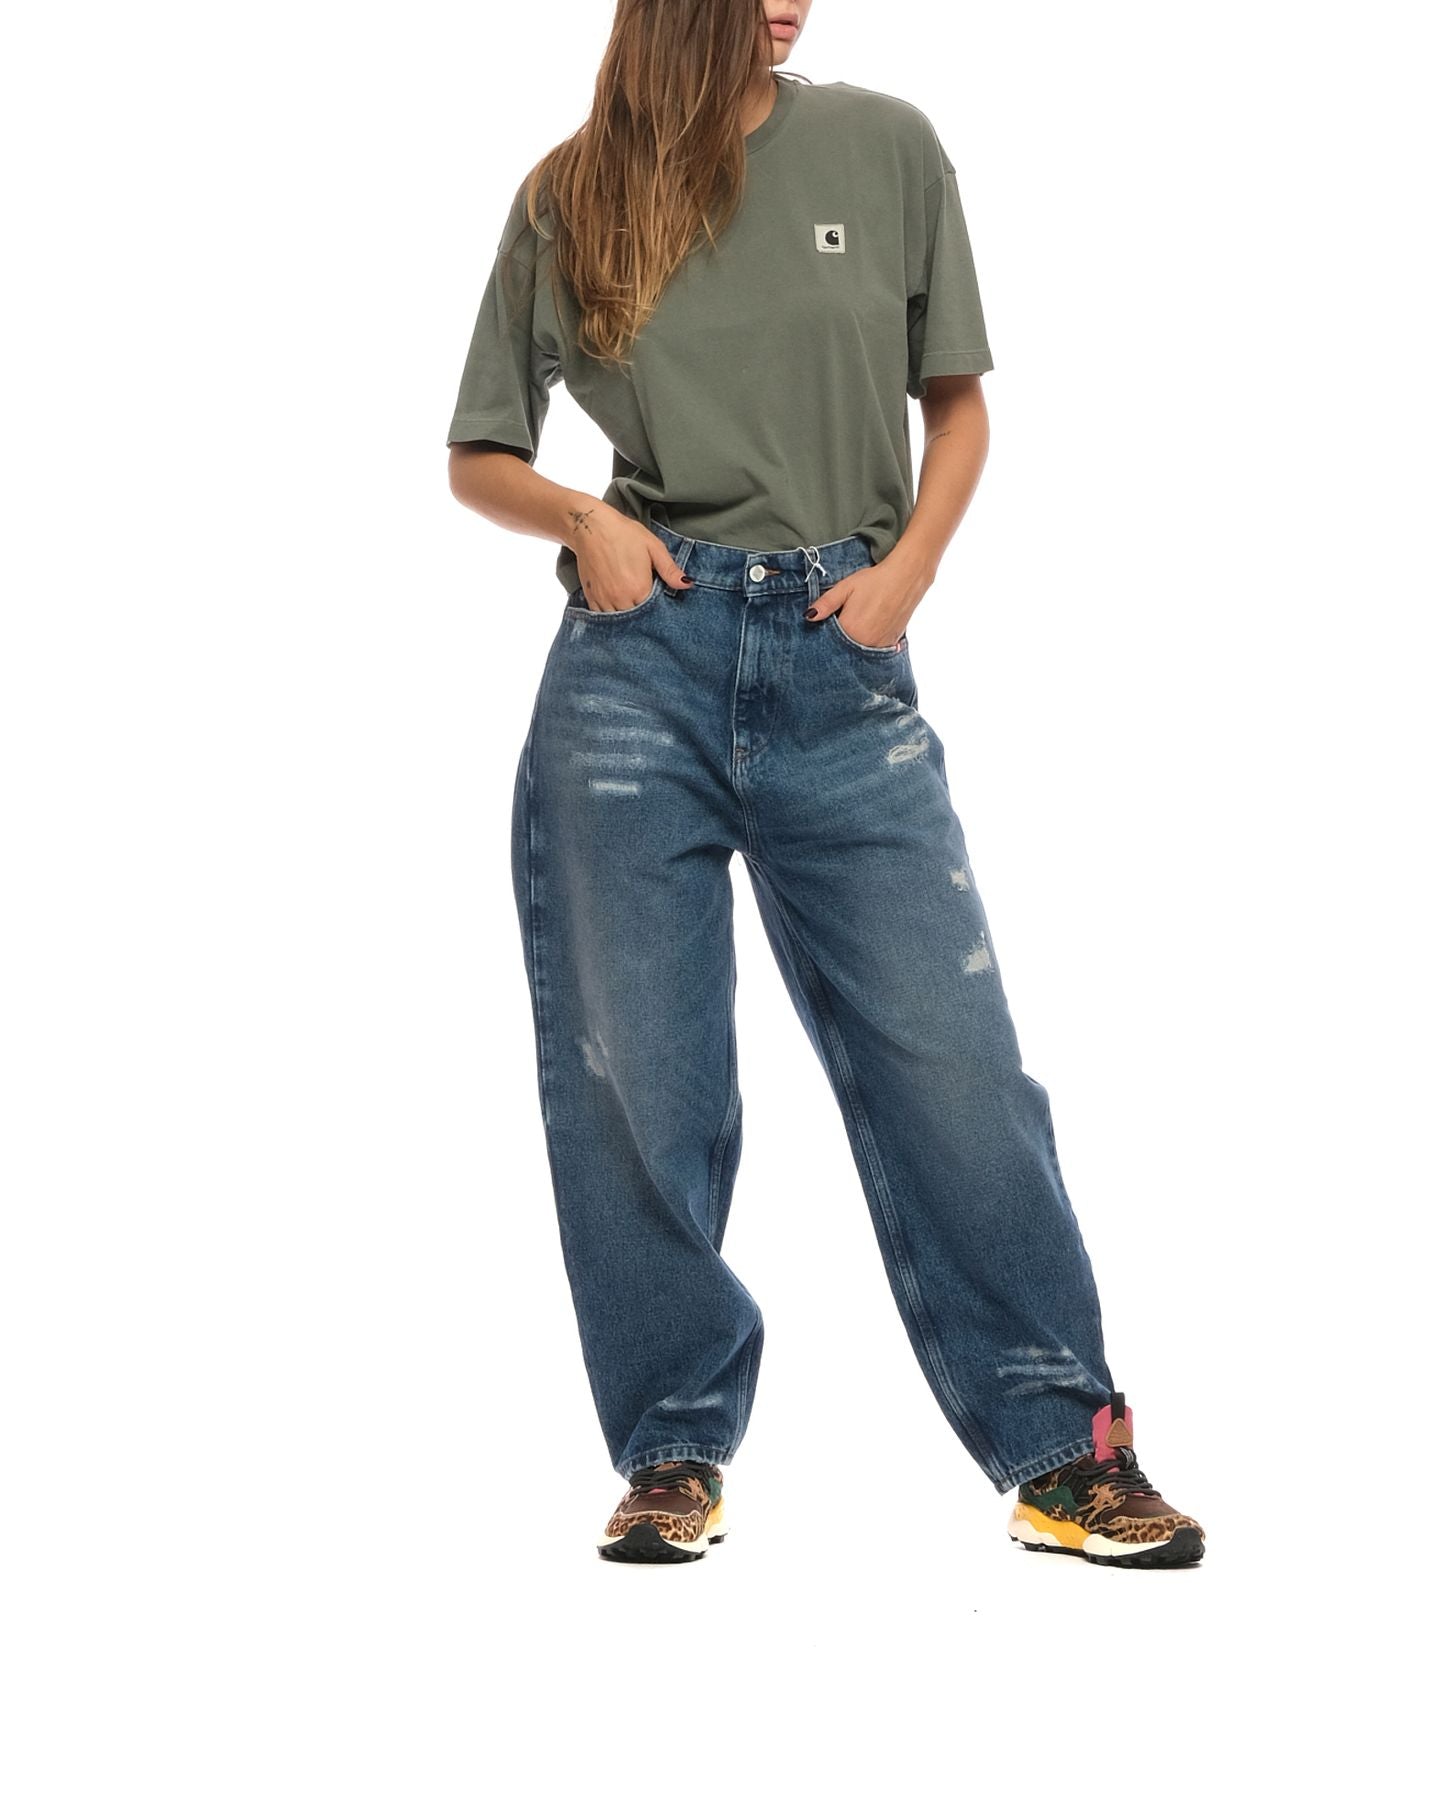 Jeans femme AMD047D4352388 999 DENIM Amish